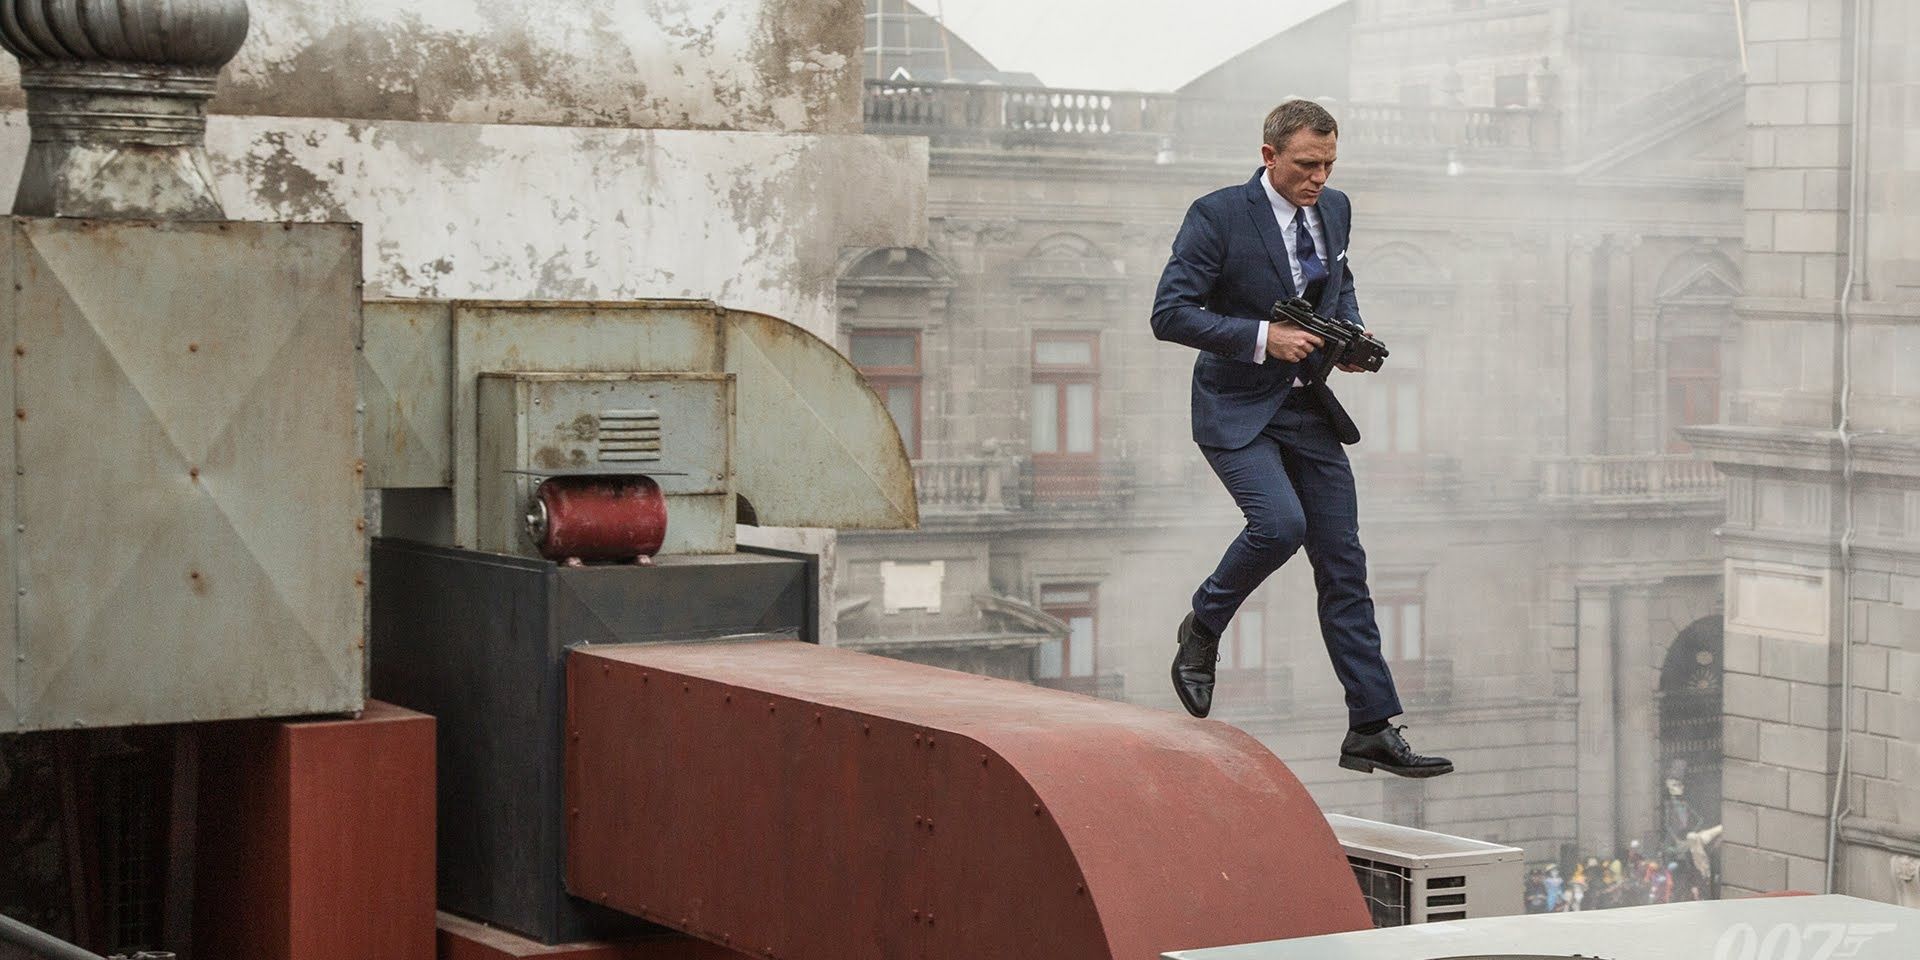 Bond rooftop scene in Spectre